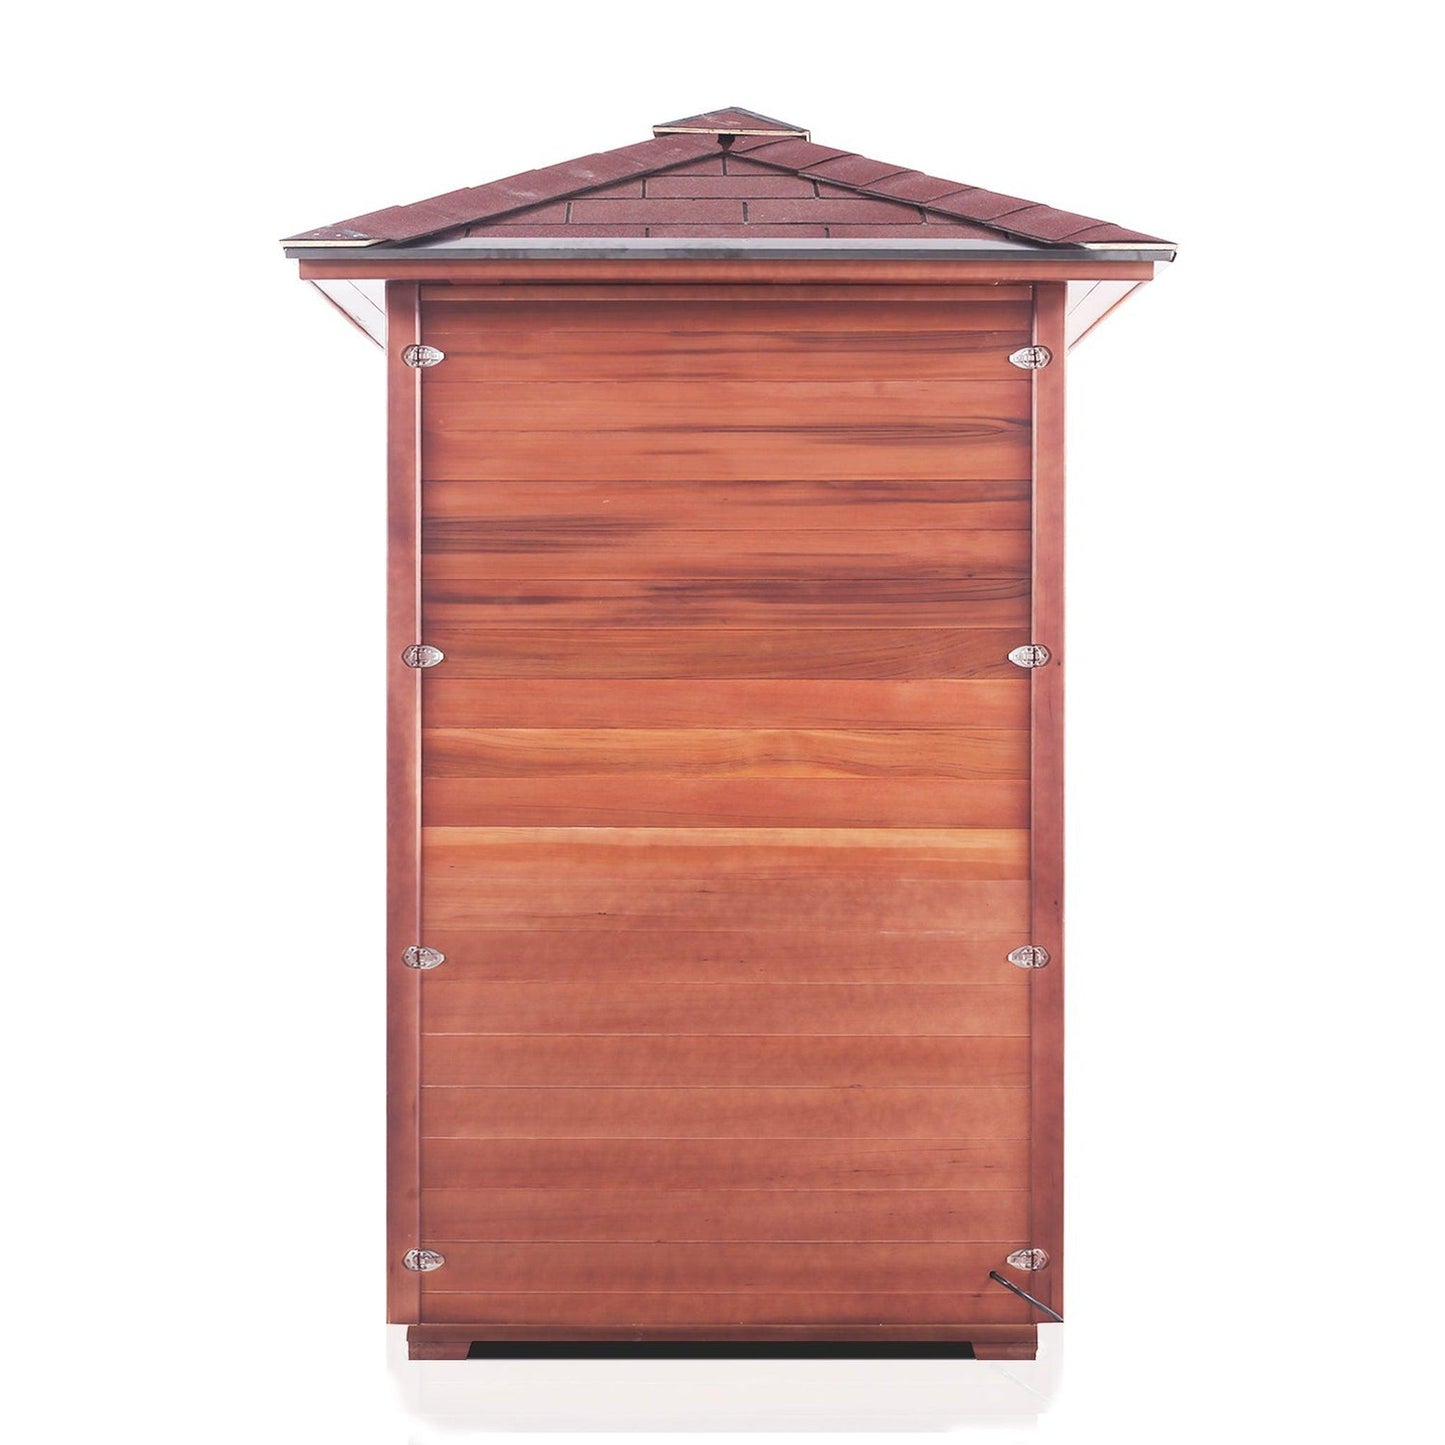 Enlighten InfraNature Original Rustic 2-Person Peak Roof Full Spectrum Infrared Outdoor Sauna